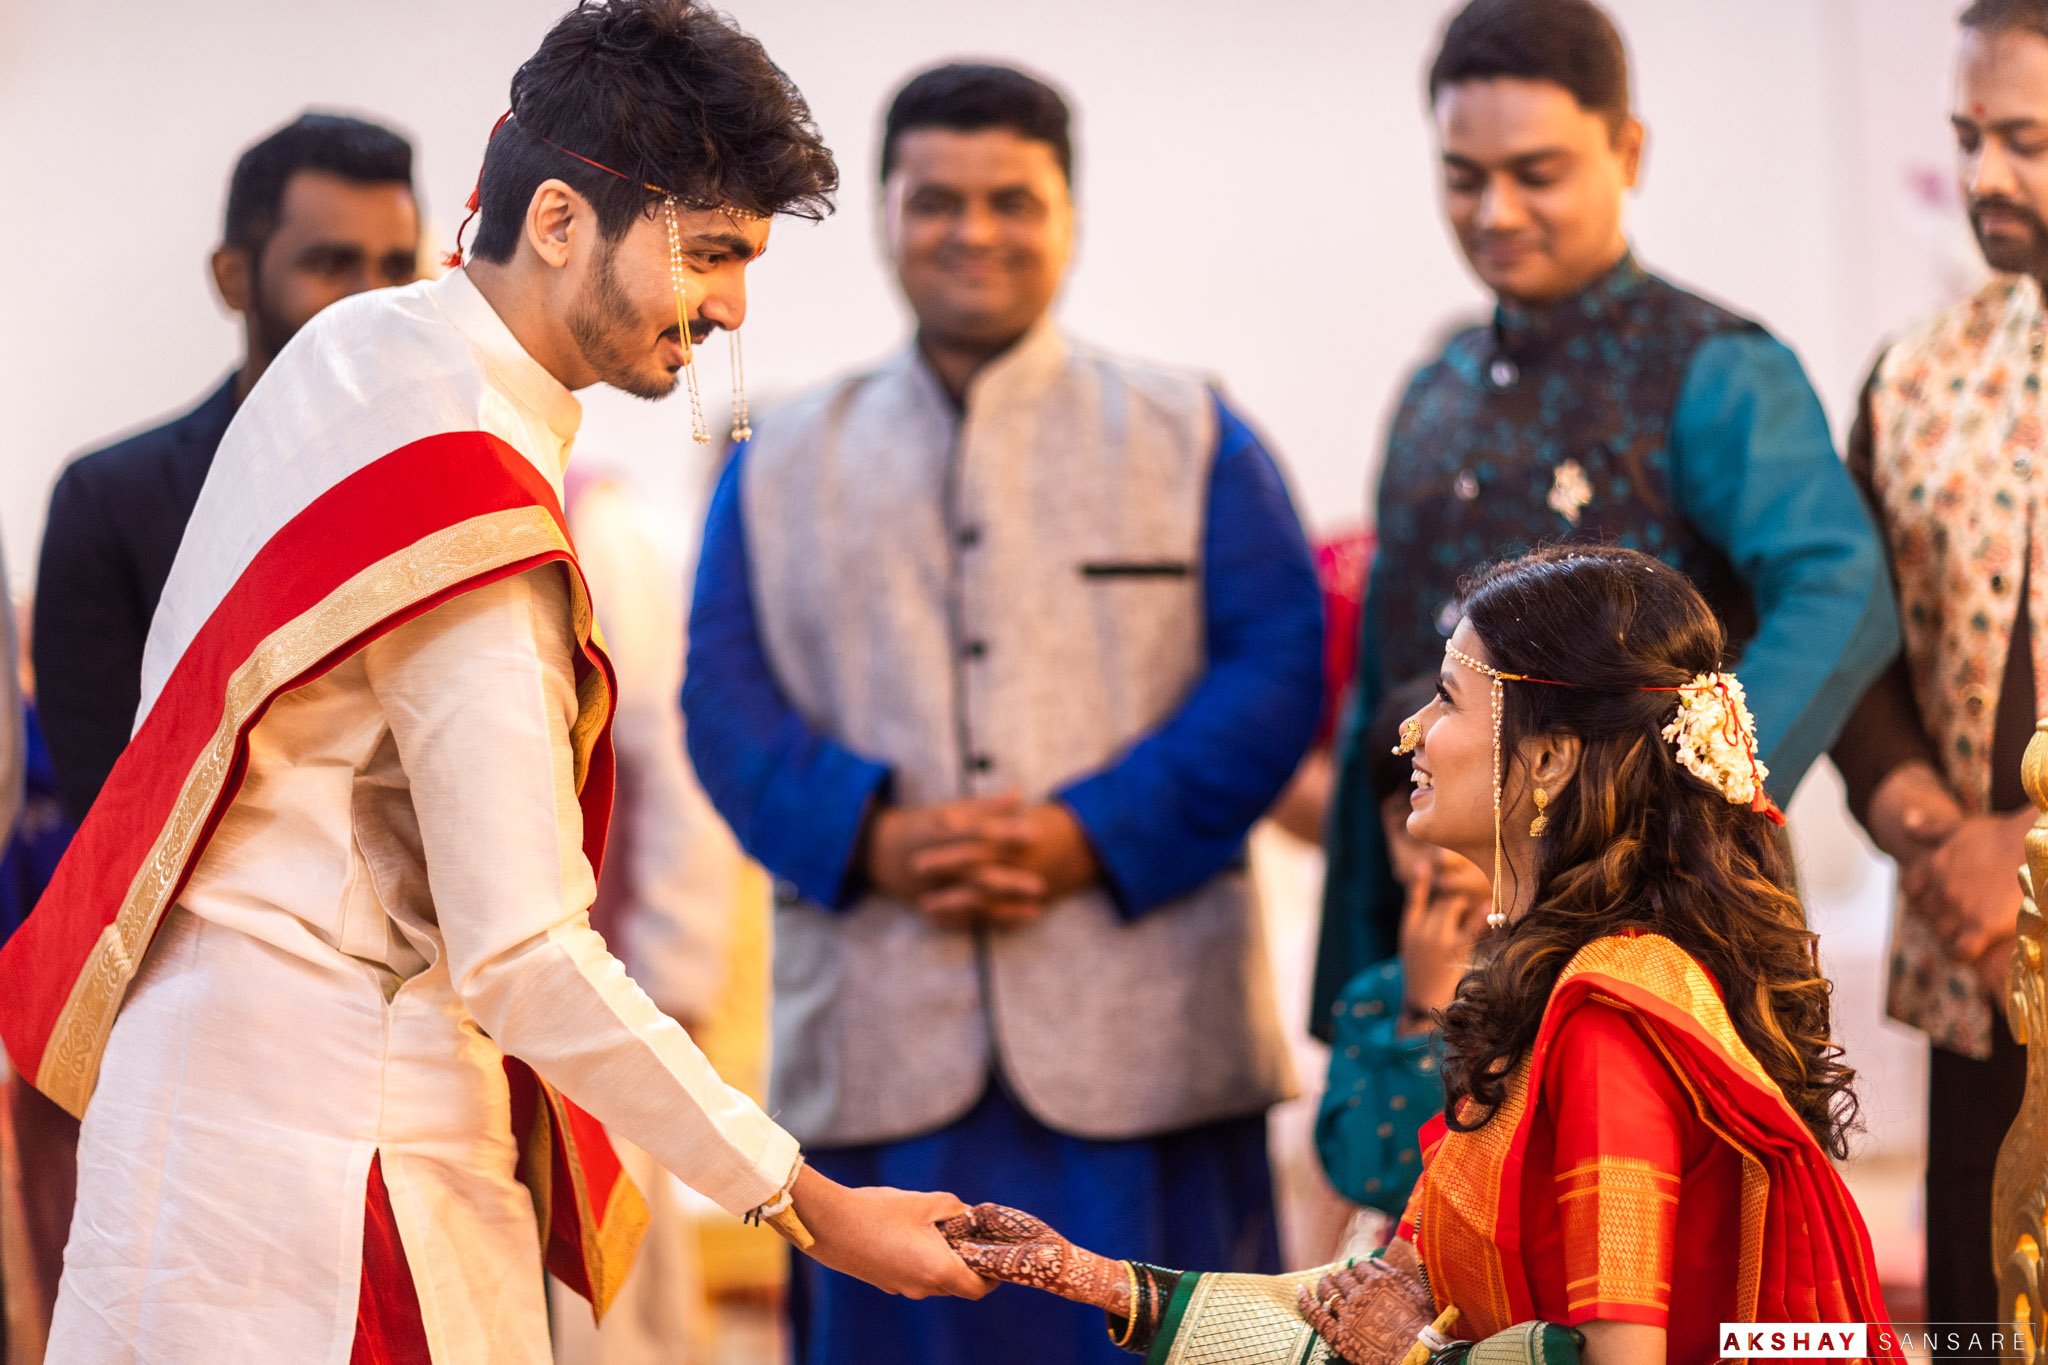 Dakshay x Basuri wedding c | Akshay Sansare Photography -26.jpg